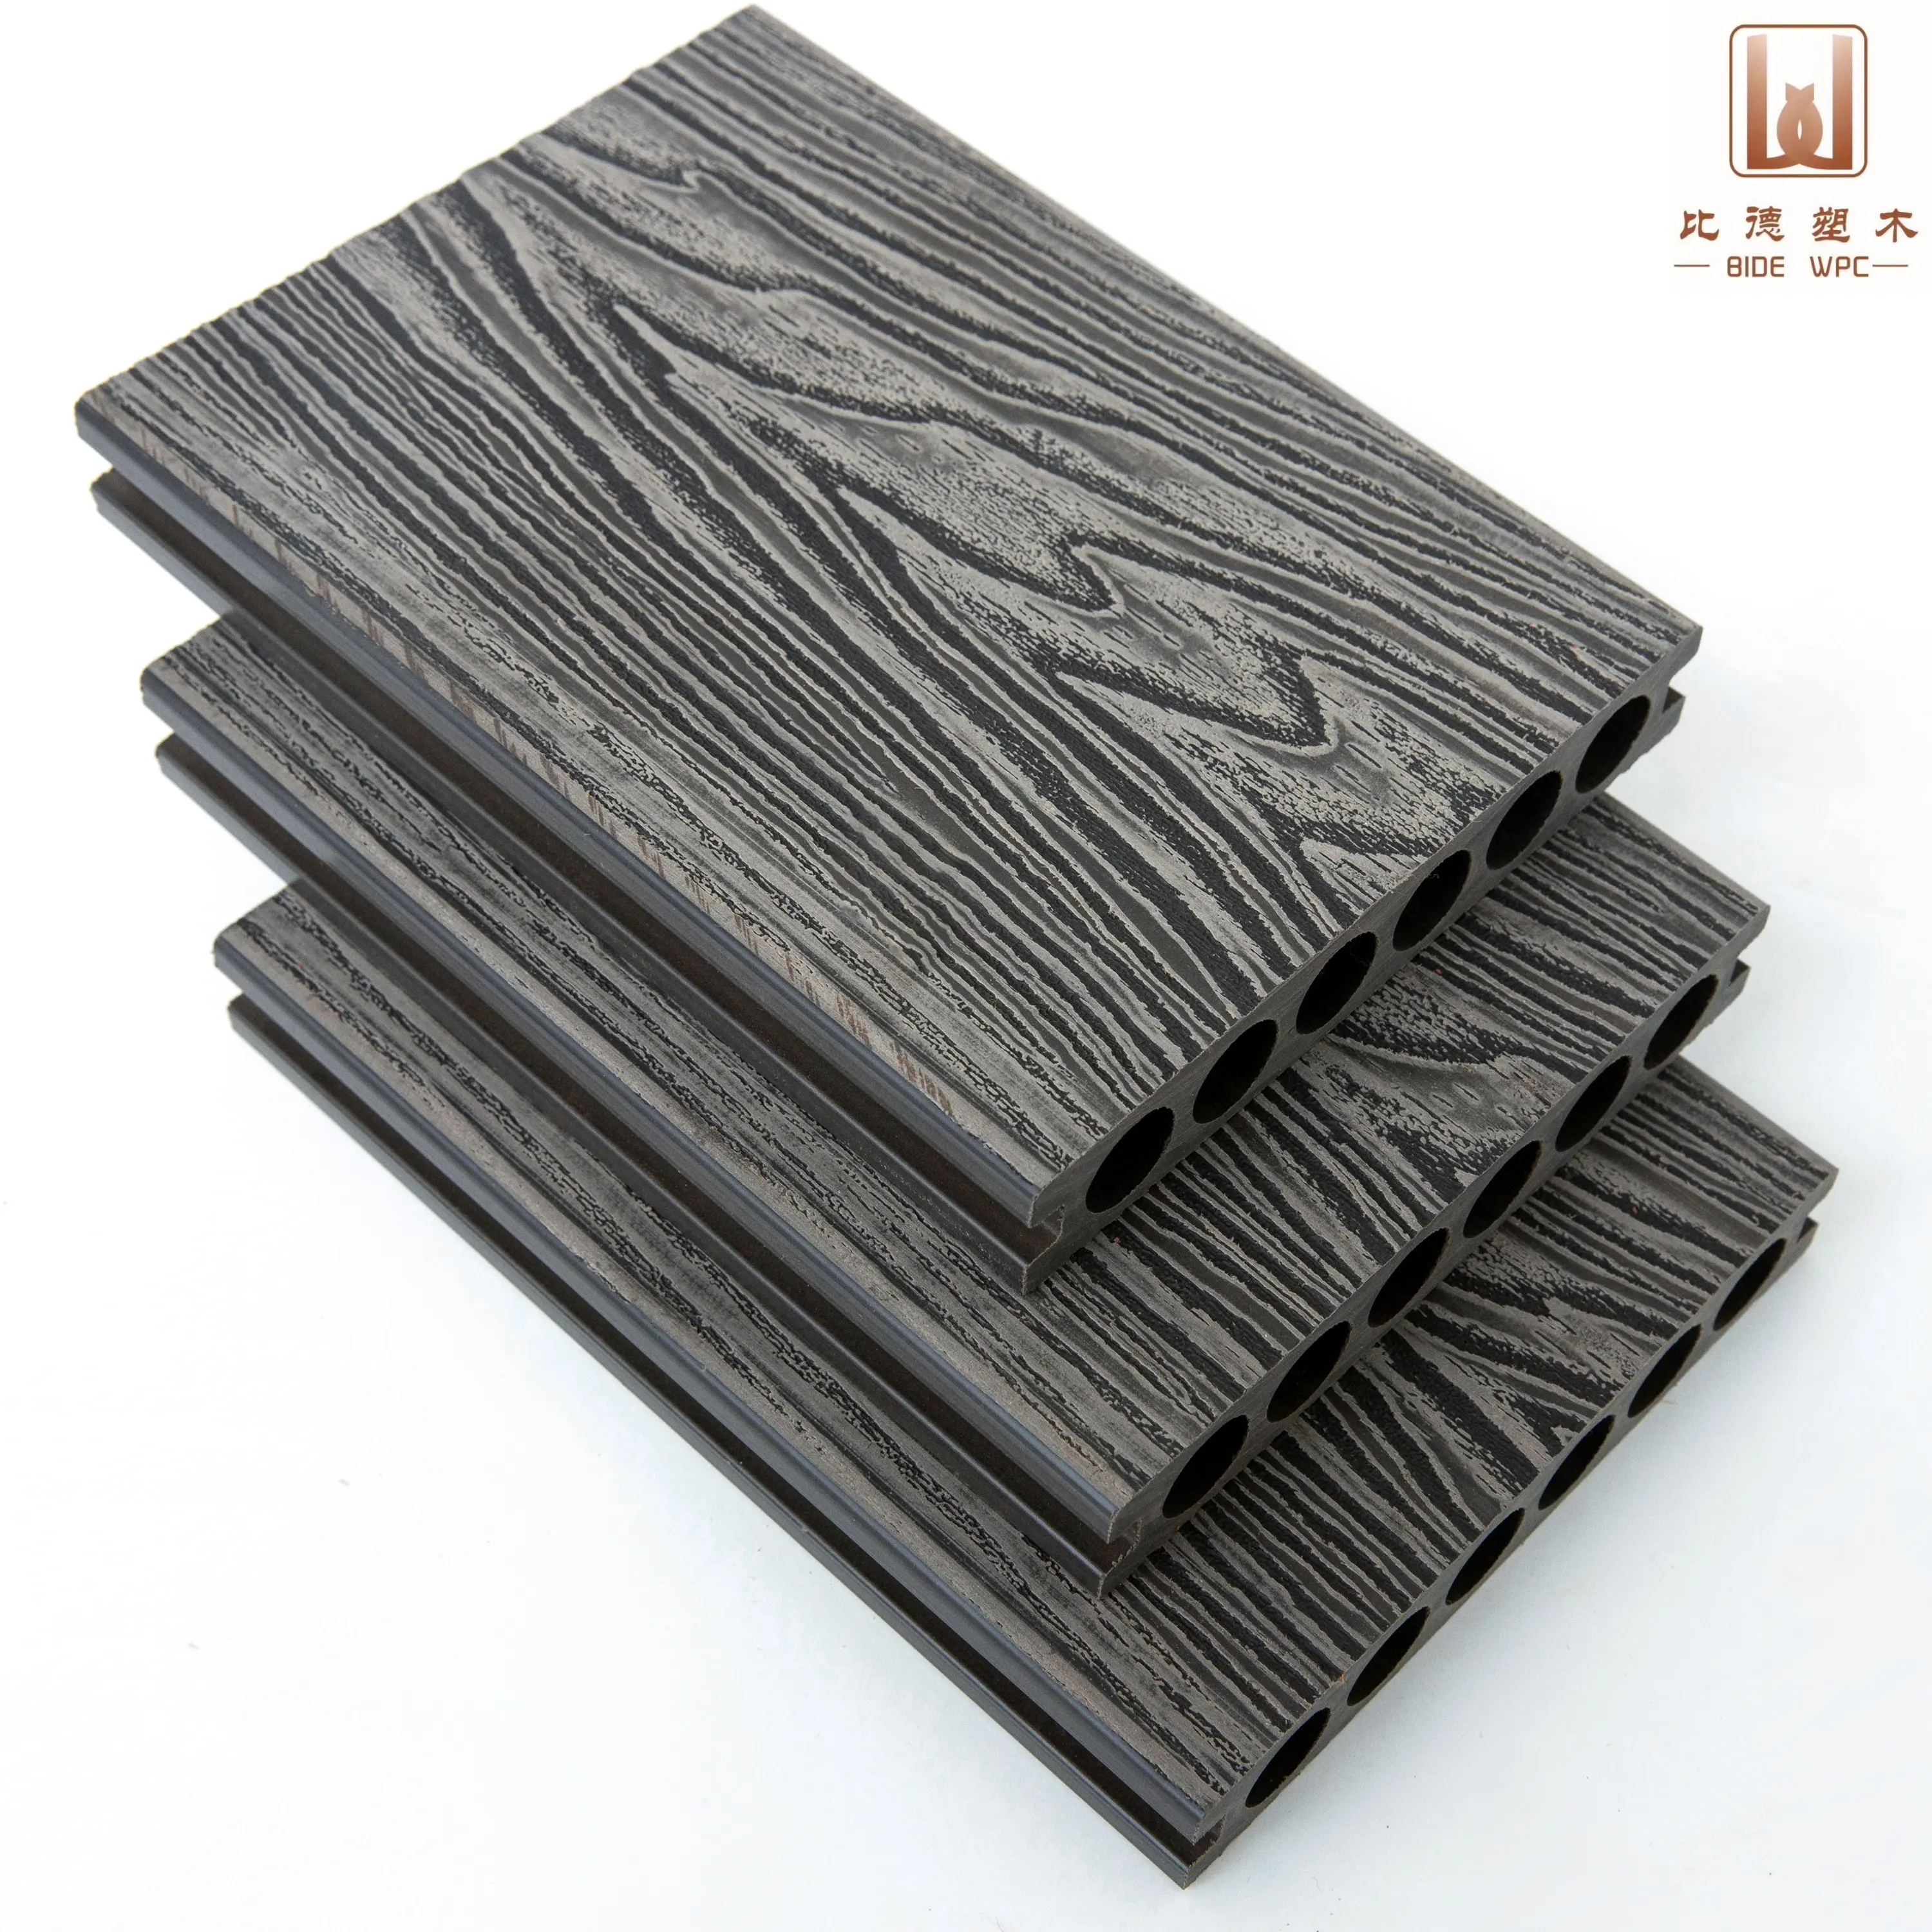 Wood plastics composite outdoor flooring Co-extrusion Exterior Wpc Decking 3rd generation